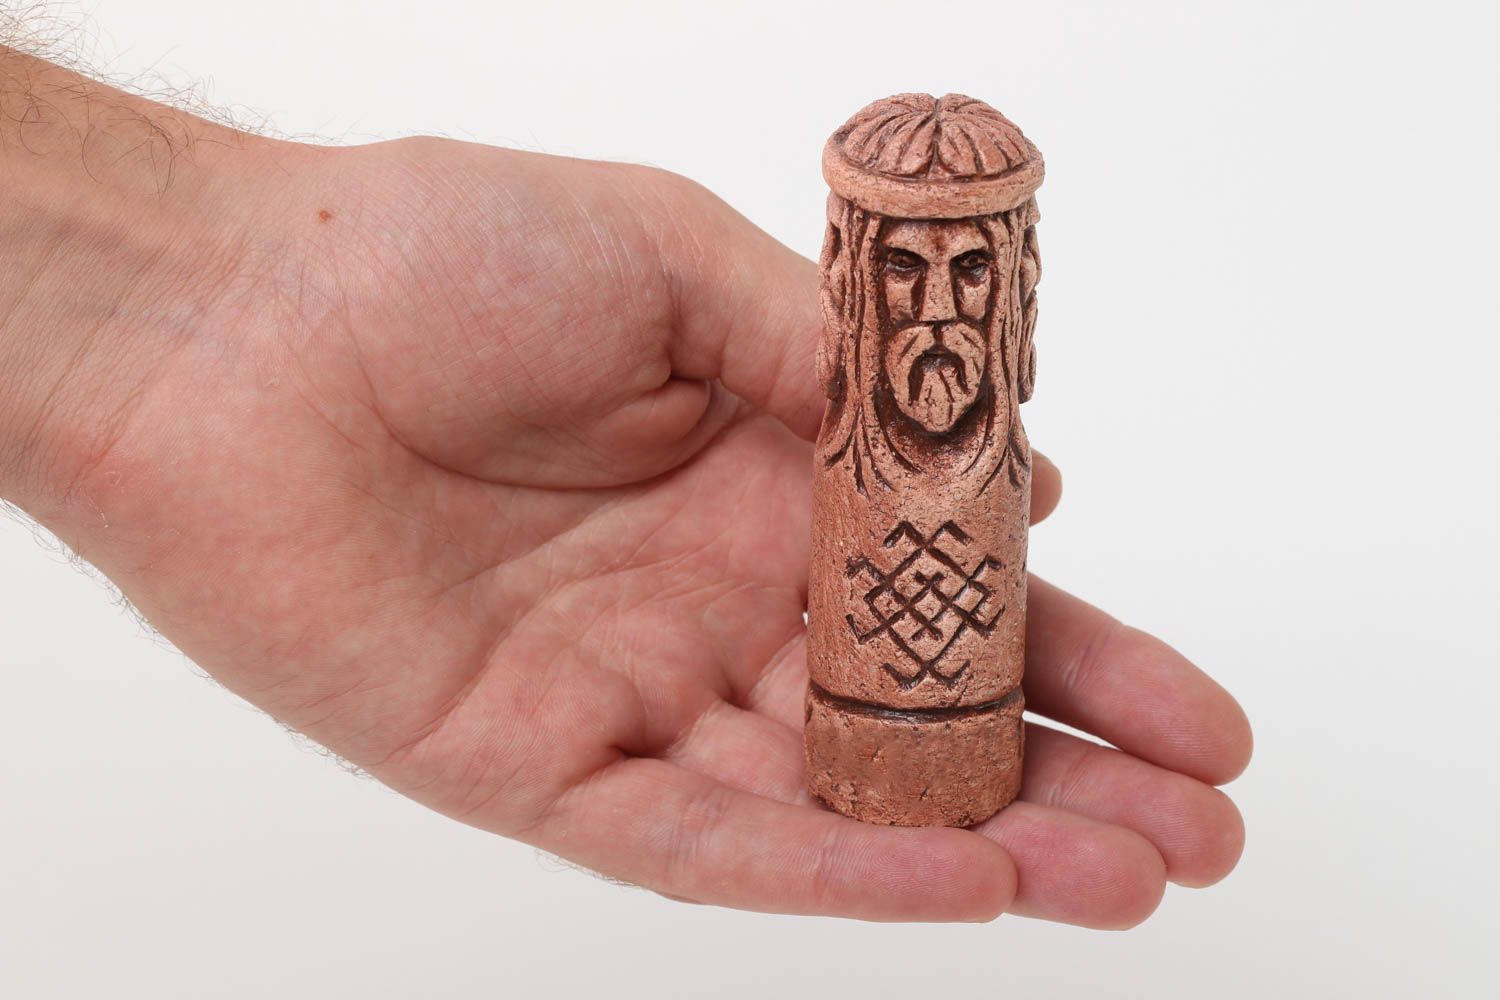 Handmade statuette unusual Slavic amulet decorative use only home decor photo 4